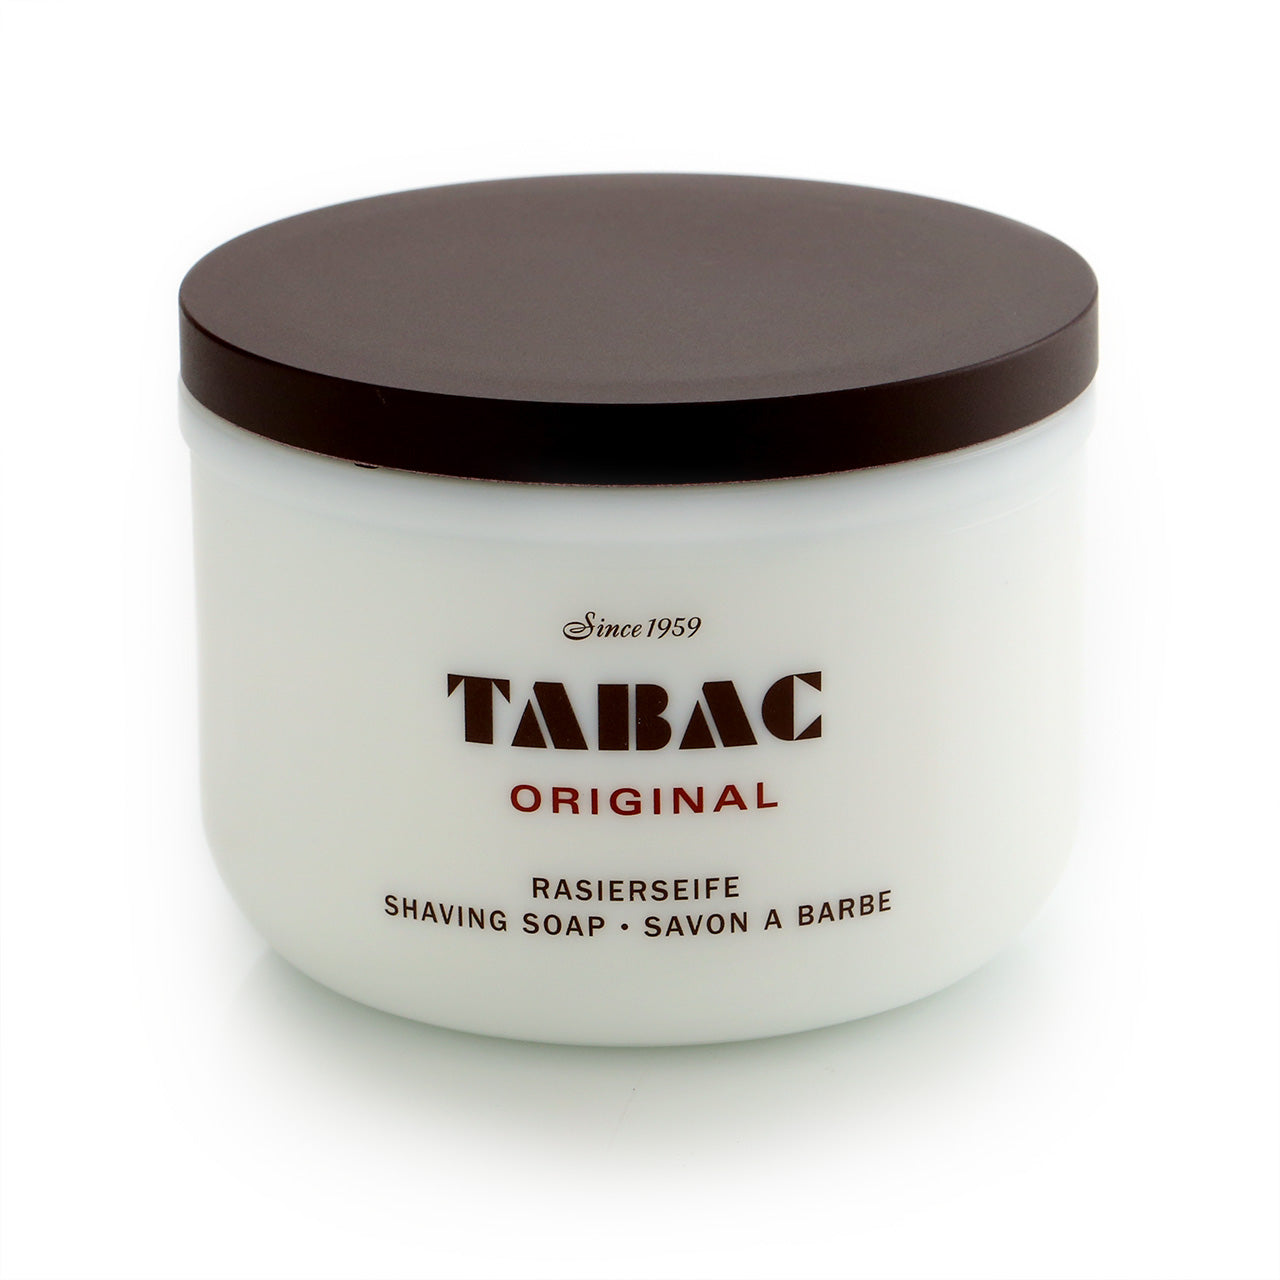 Tabac Original Shaving Soap in a white glass bowl